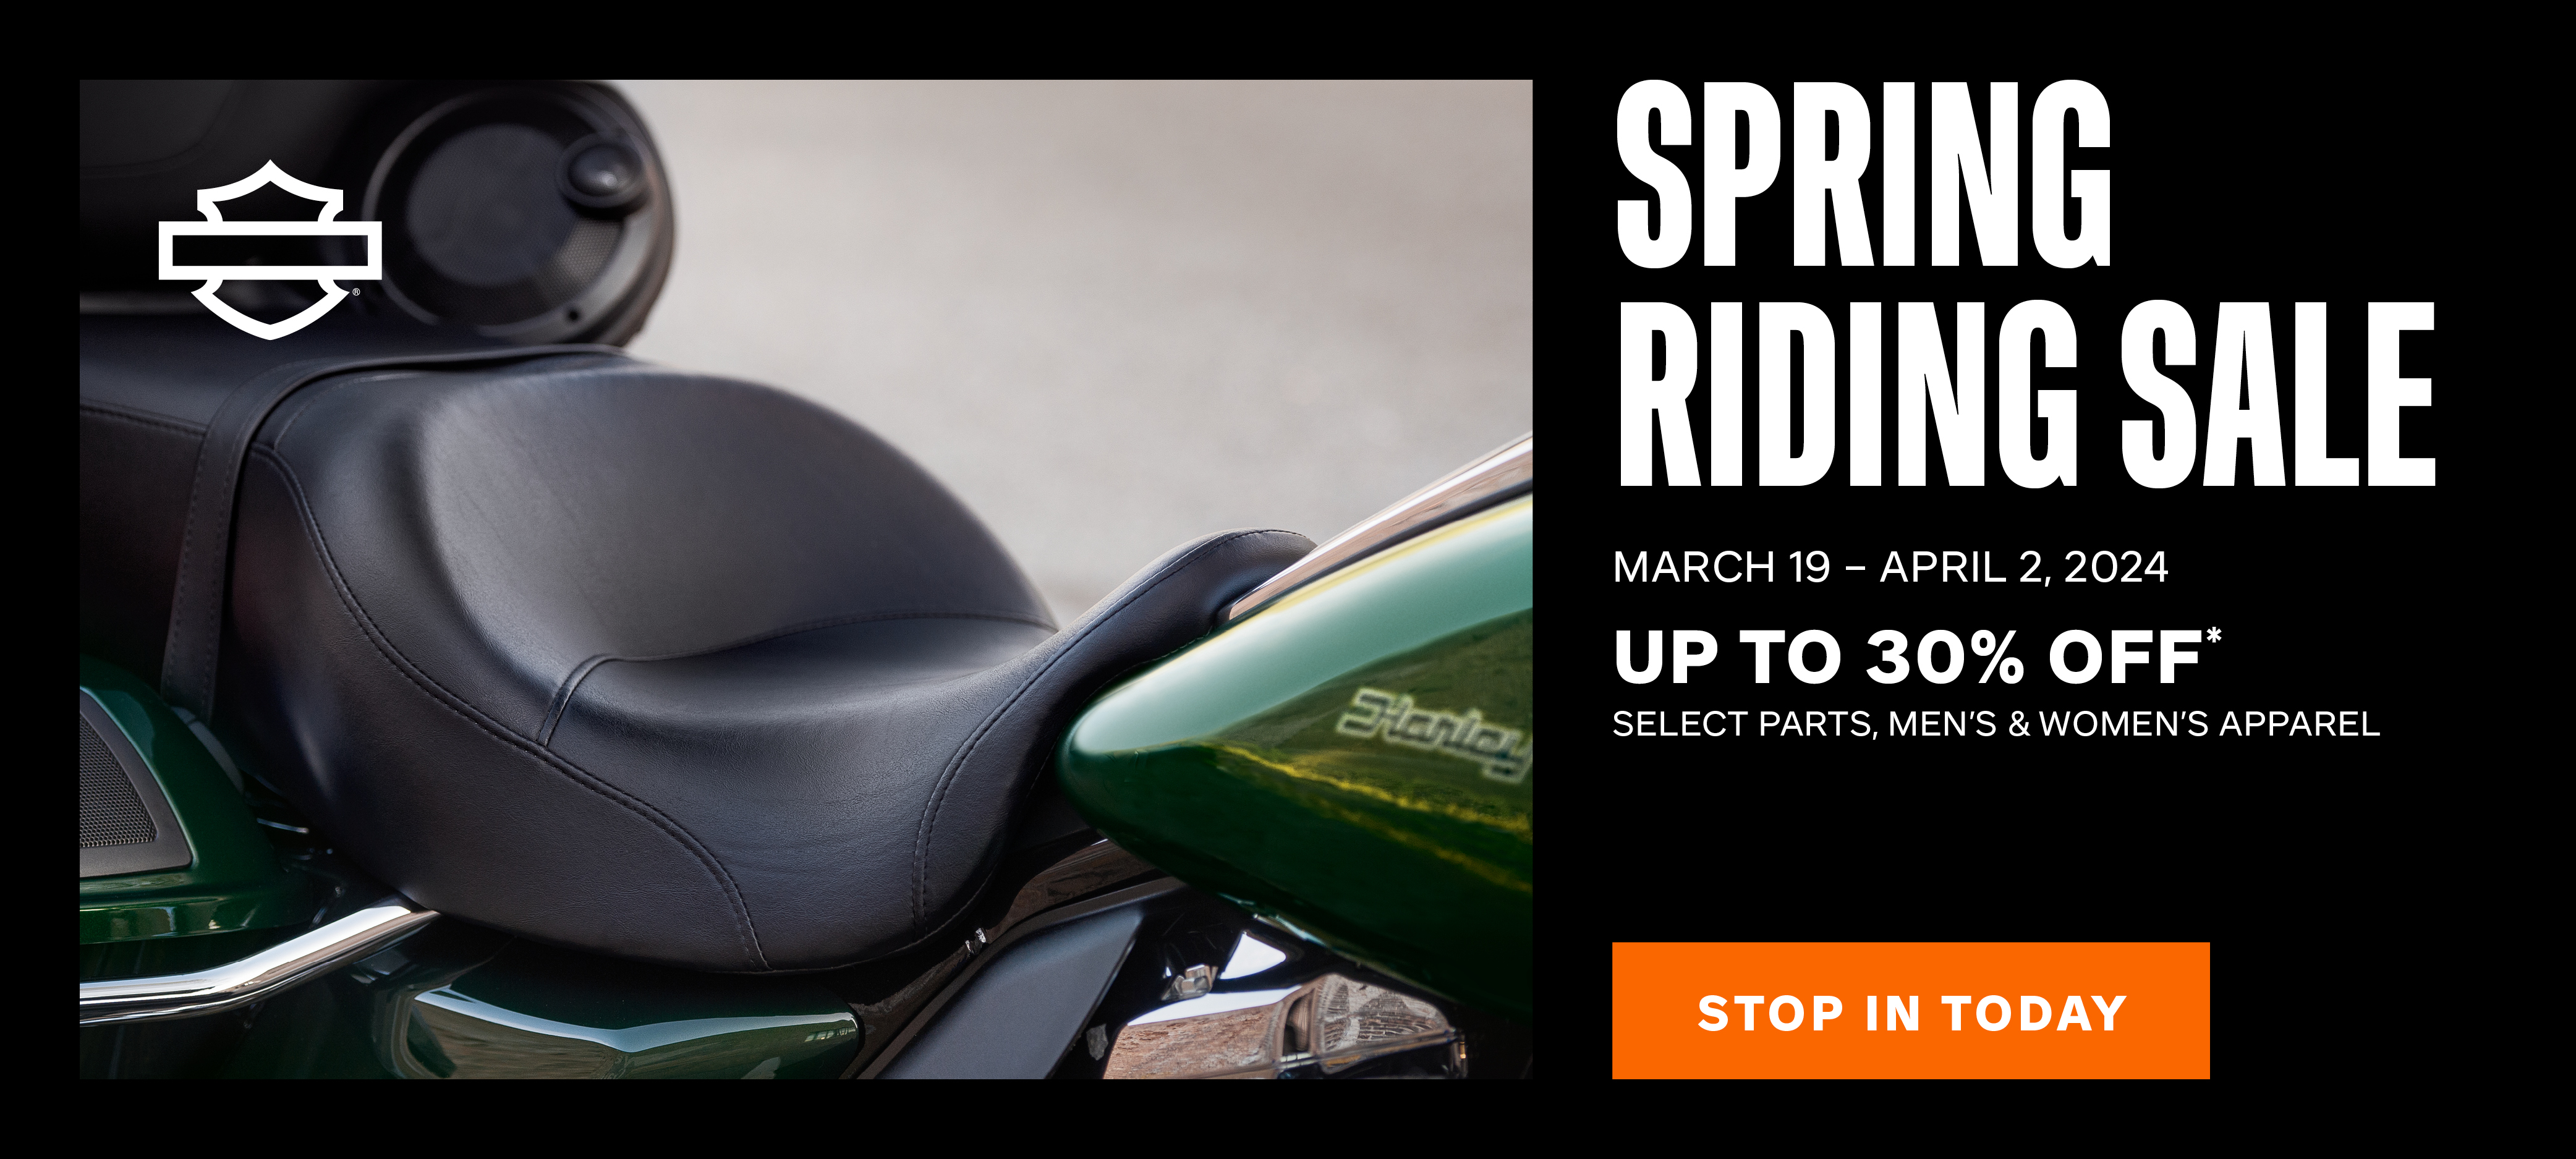 spring riding sale 2000x900 web banner